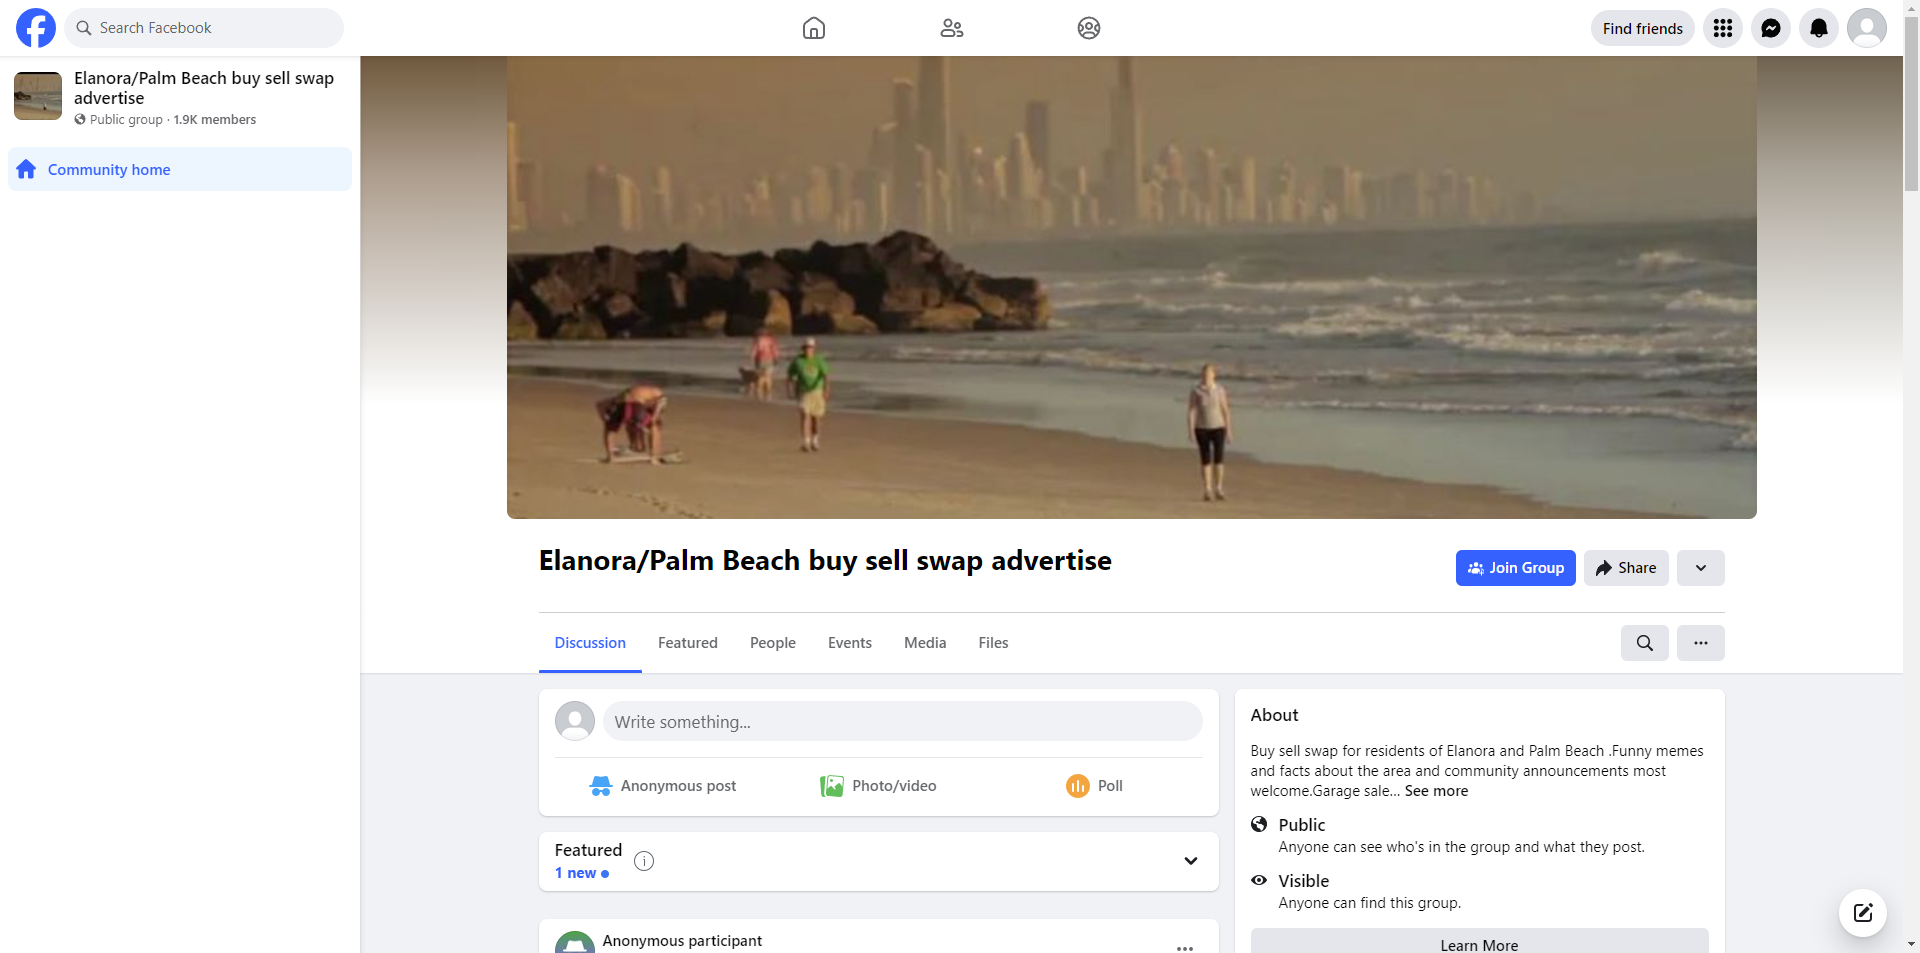 Elanora/Palm Beach Buy Sell Swap Advertise